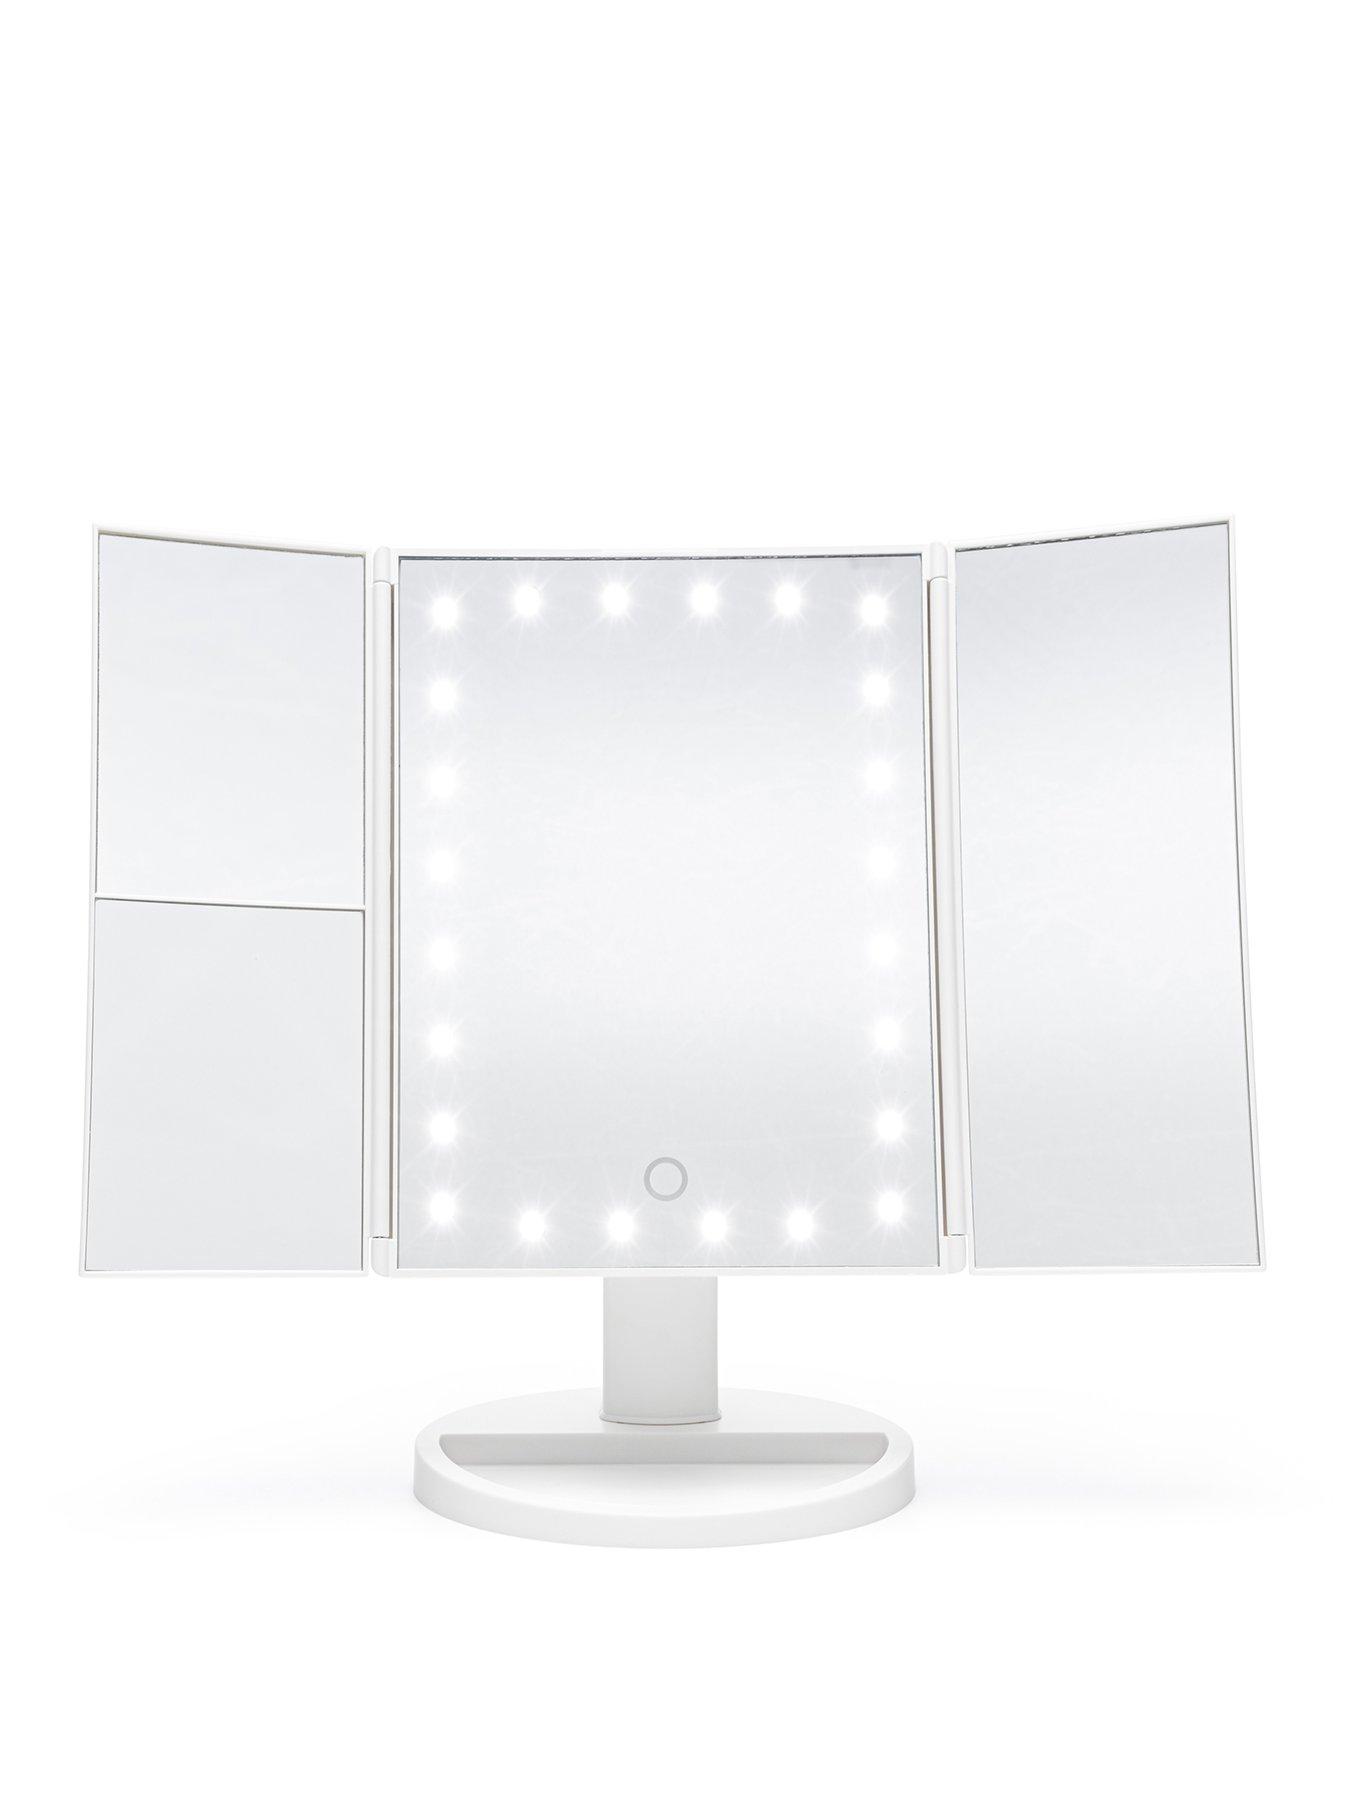 SalonPro Professional LED Light Magnifying Lamp Facial Spa Treatment